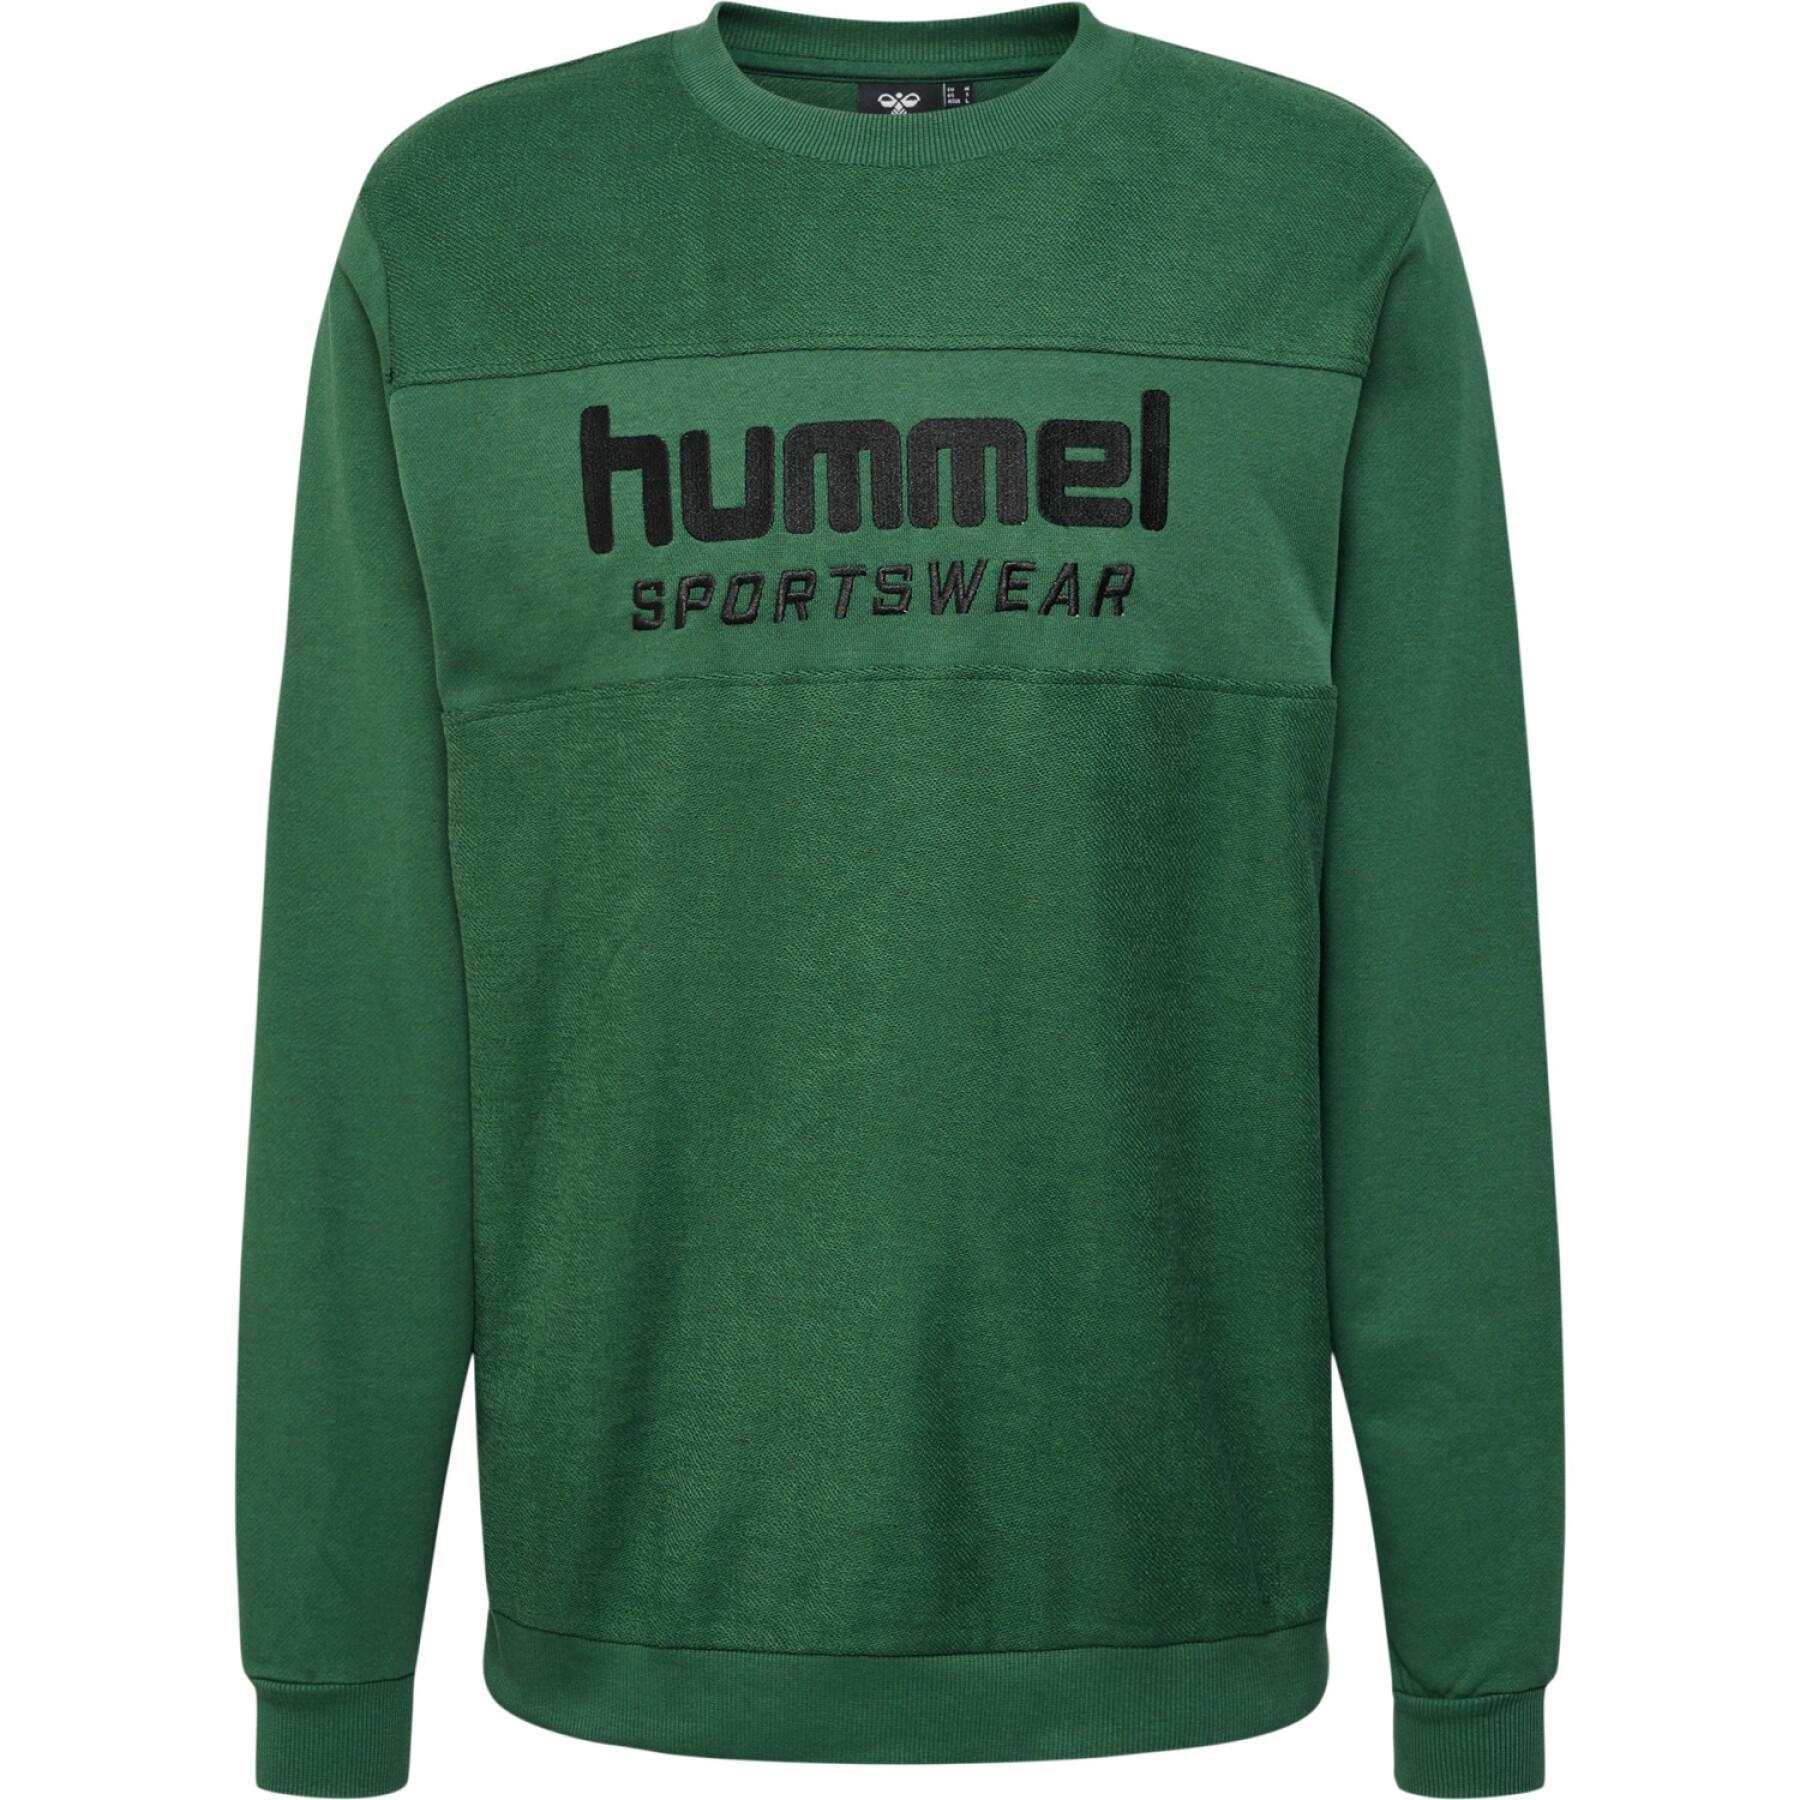 Sweatshirt Hummel Lgc Kyle